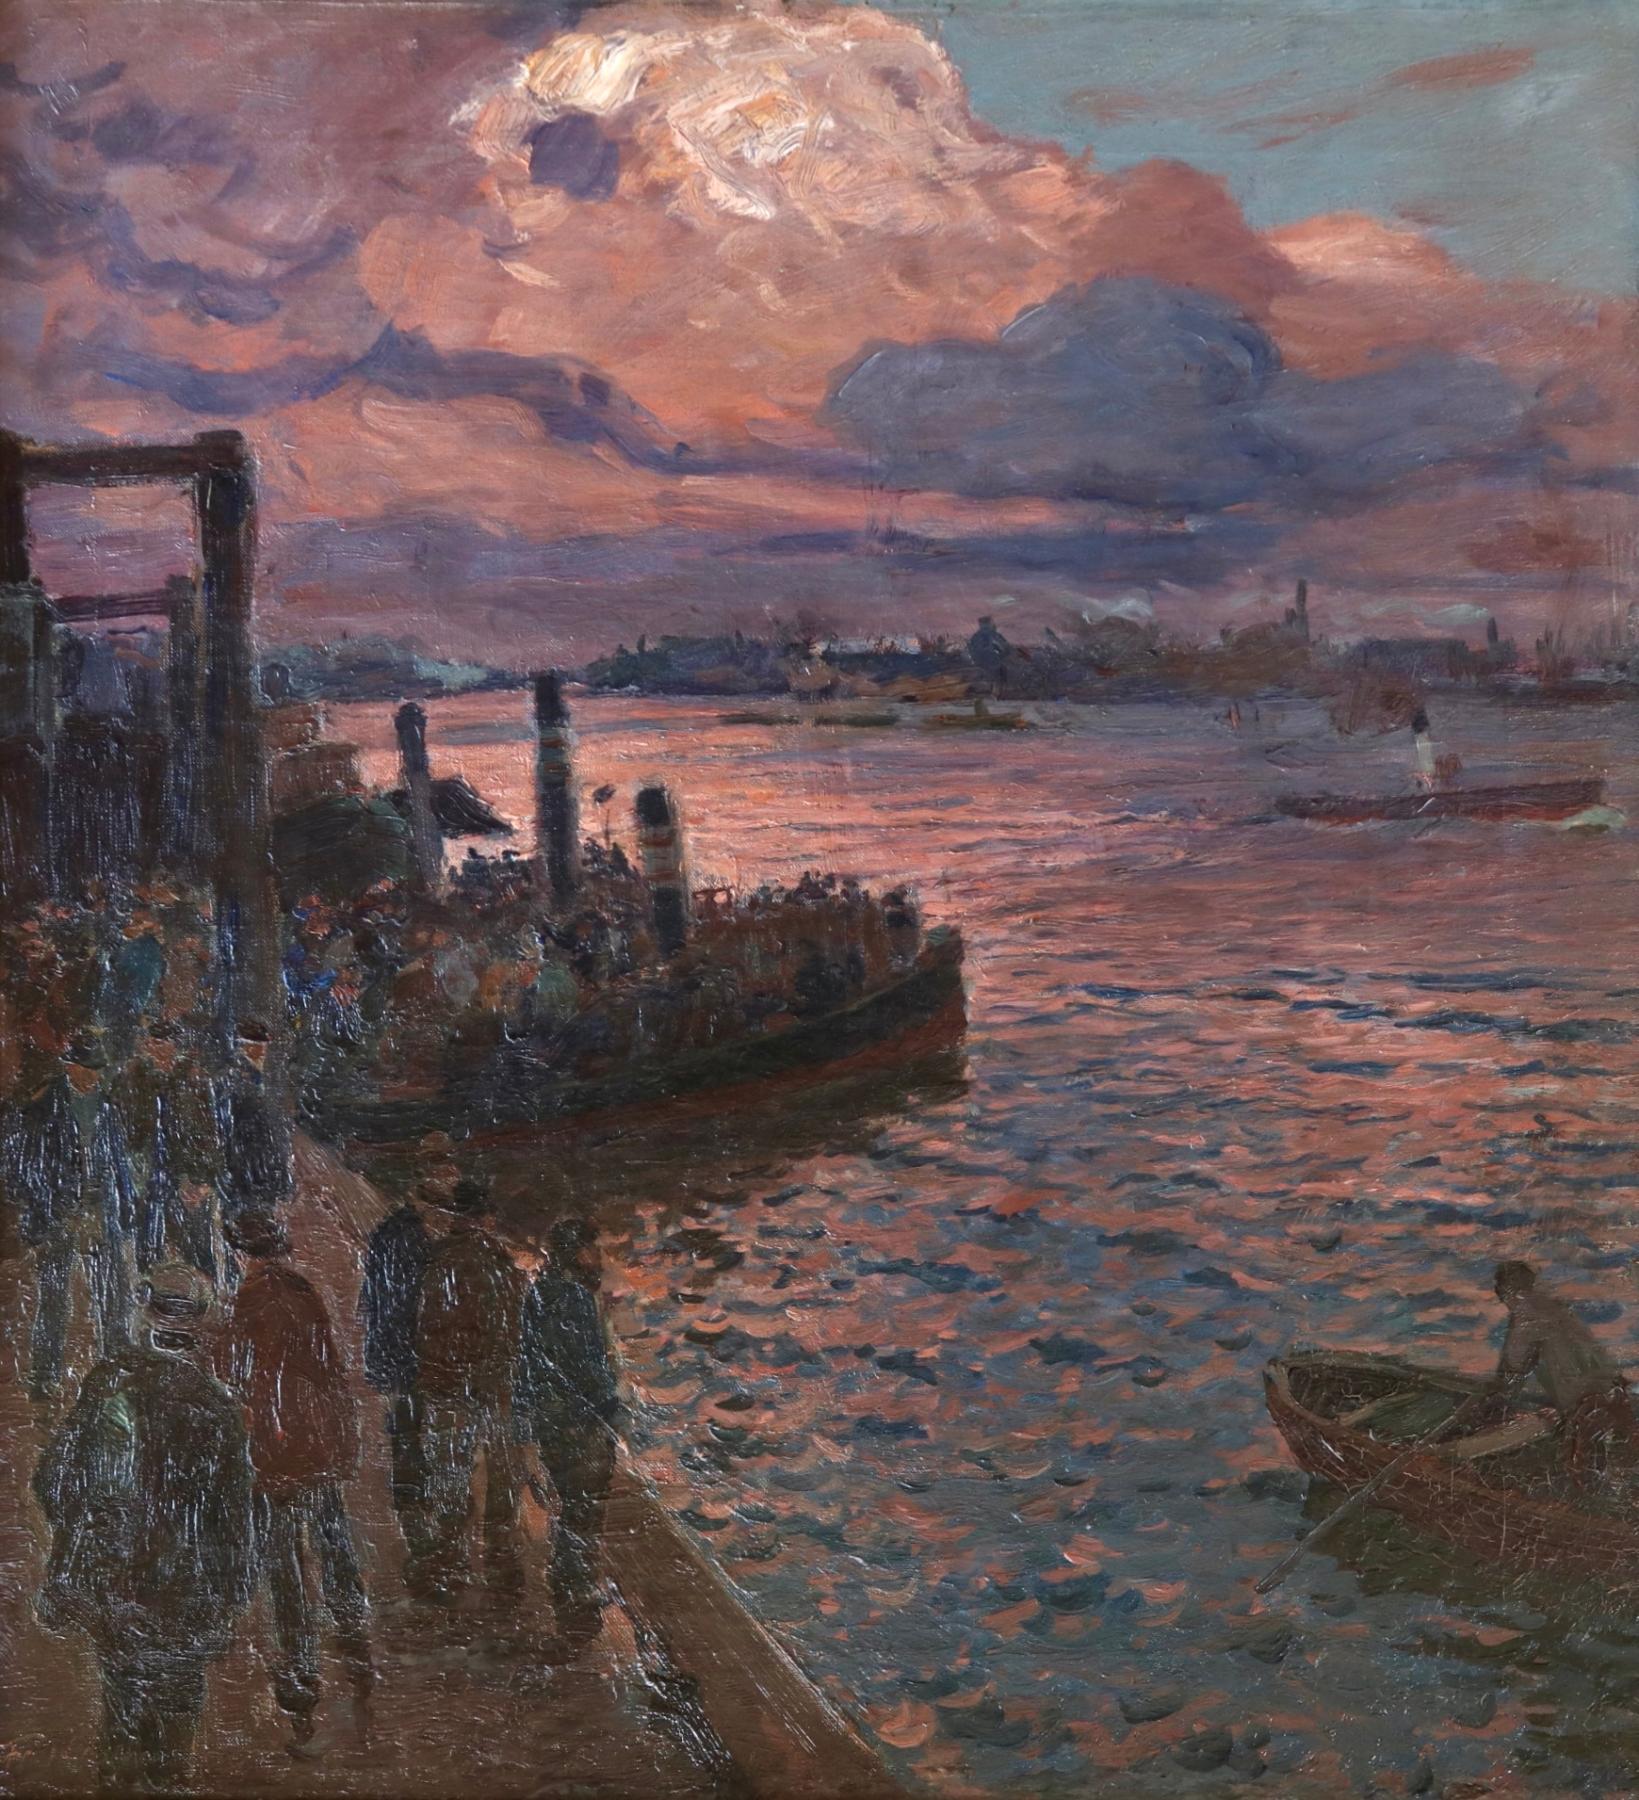 Friedrich Kallmorgen Figurative Painting - Waiting for the Ferry - Hamburg - Impressionist Oil, River at Night - Kallmorgen